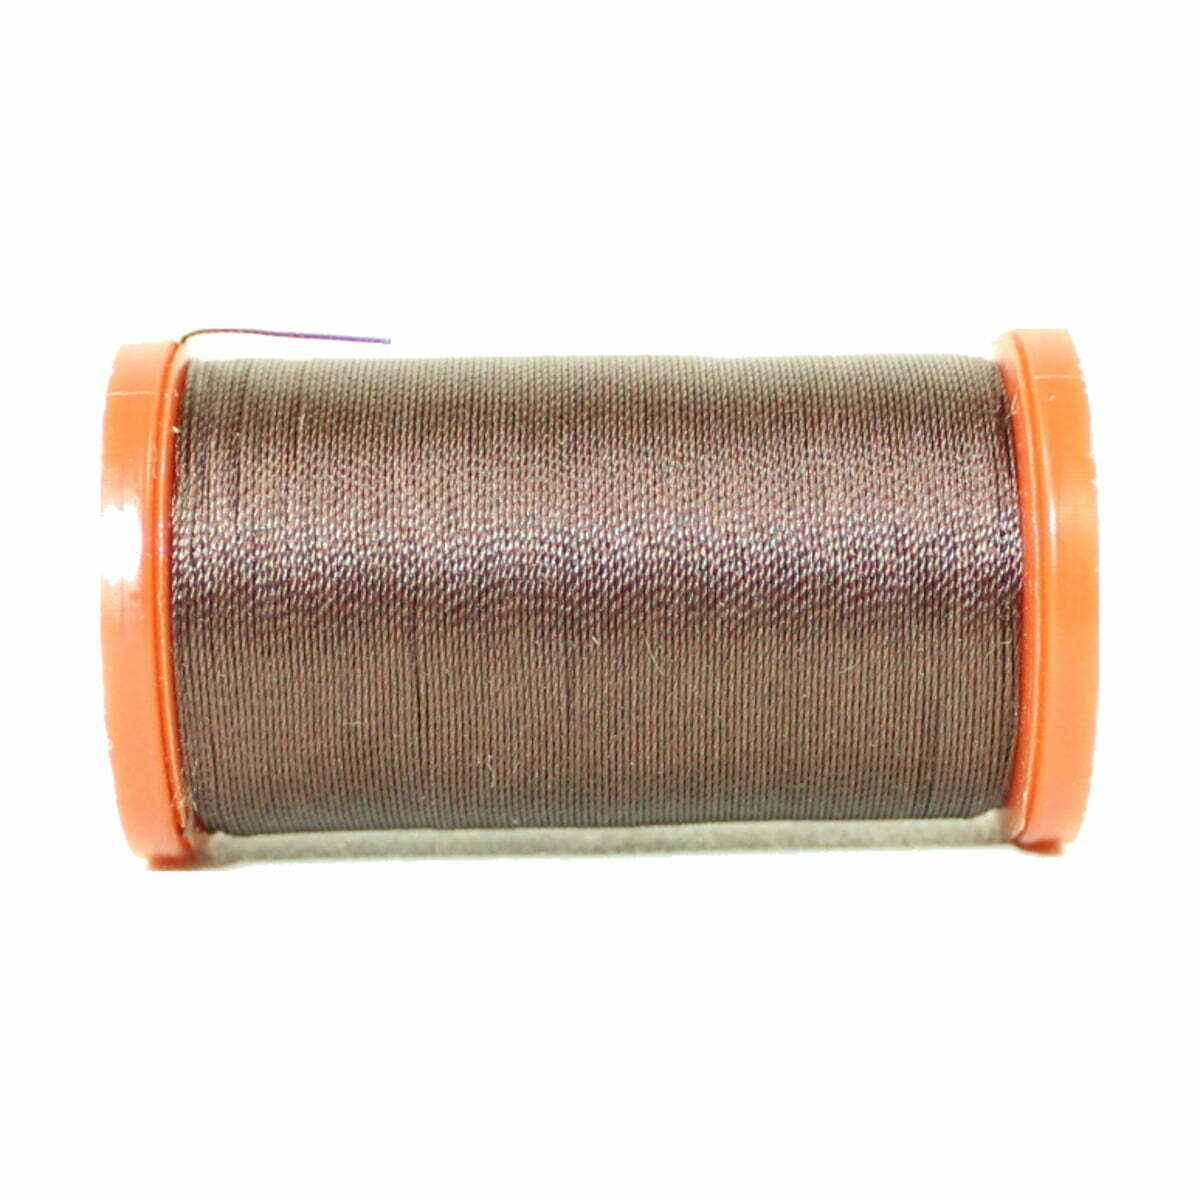 Coats & Clark Upholstery Chona Brown Nylon Thread, 150 Yards 